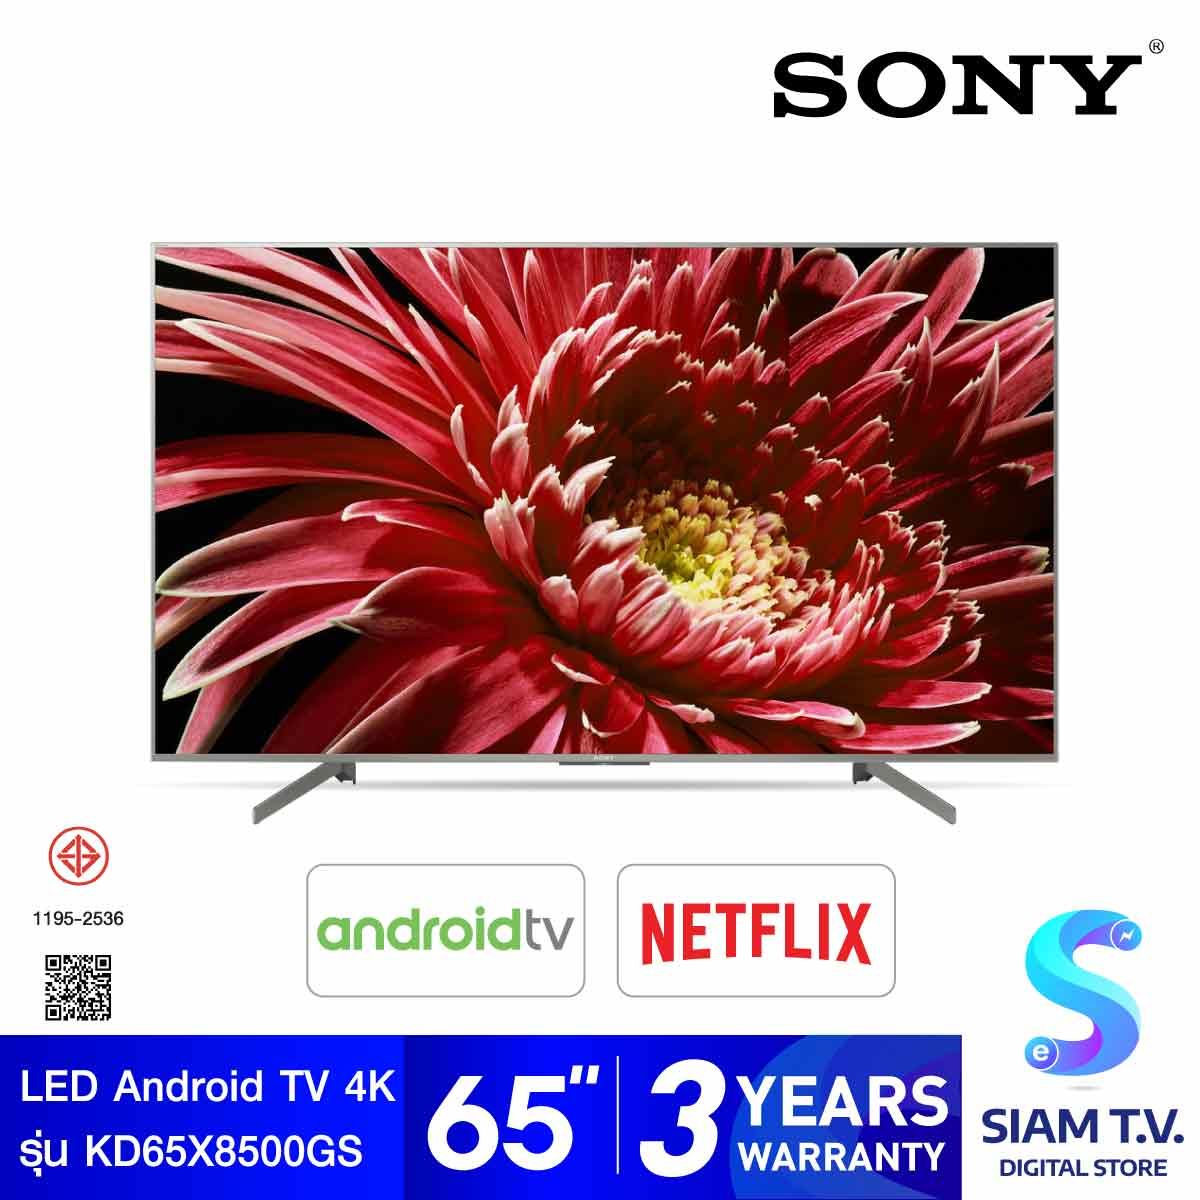 SONY LED Android TV 4K รุ่น KD-65X8500GS 4K Ultra HD  High Dynamic Range HDR สมาร์ททีวี